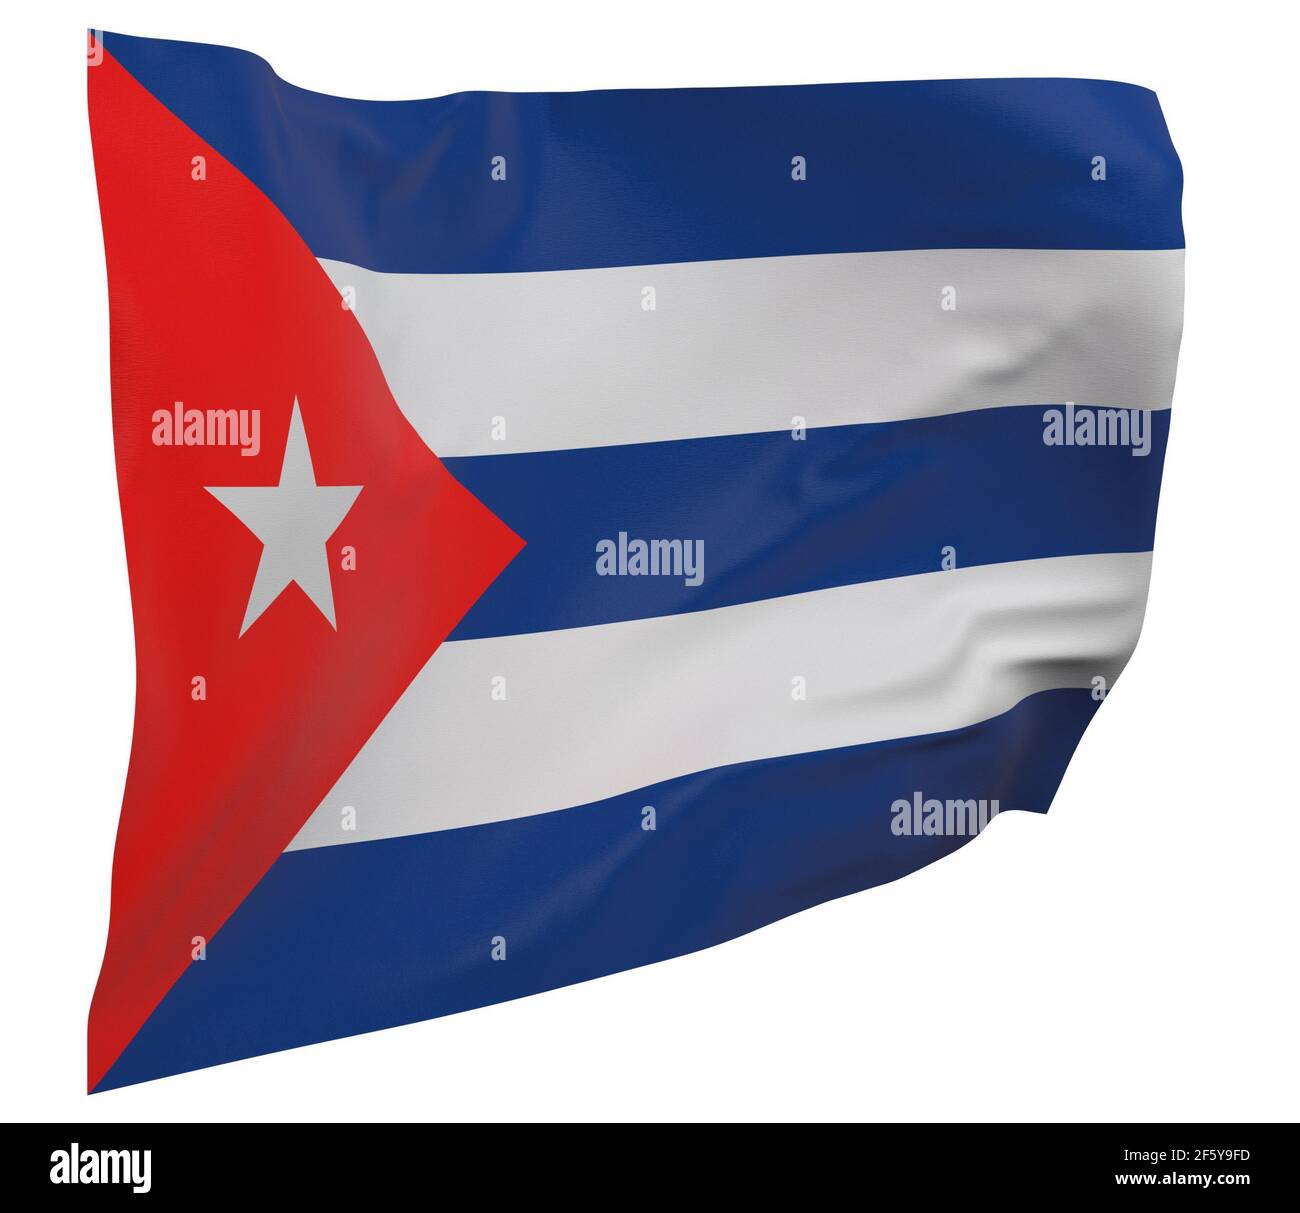 Cuba flag isolated. Waving banner. National flag of Cuba Stock Photo